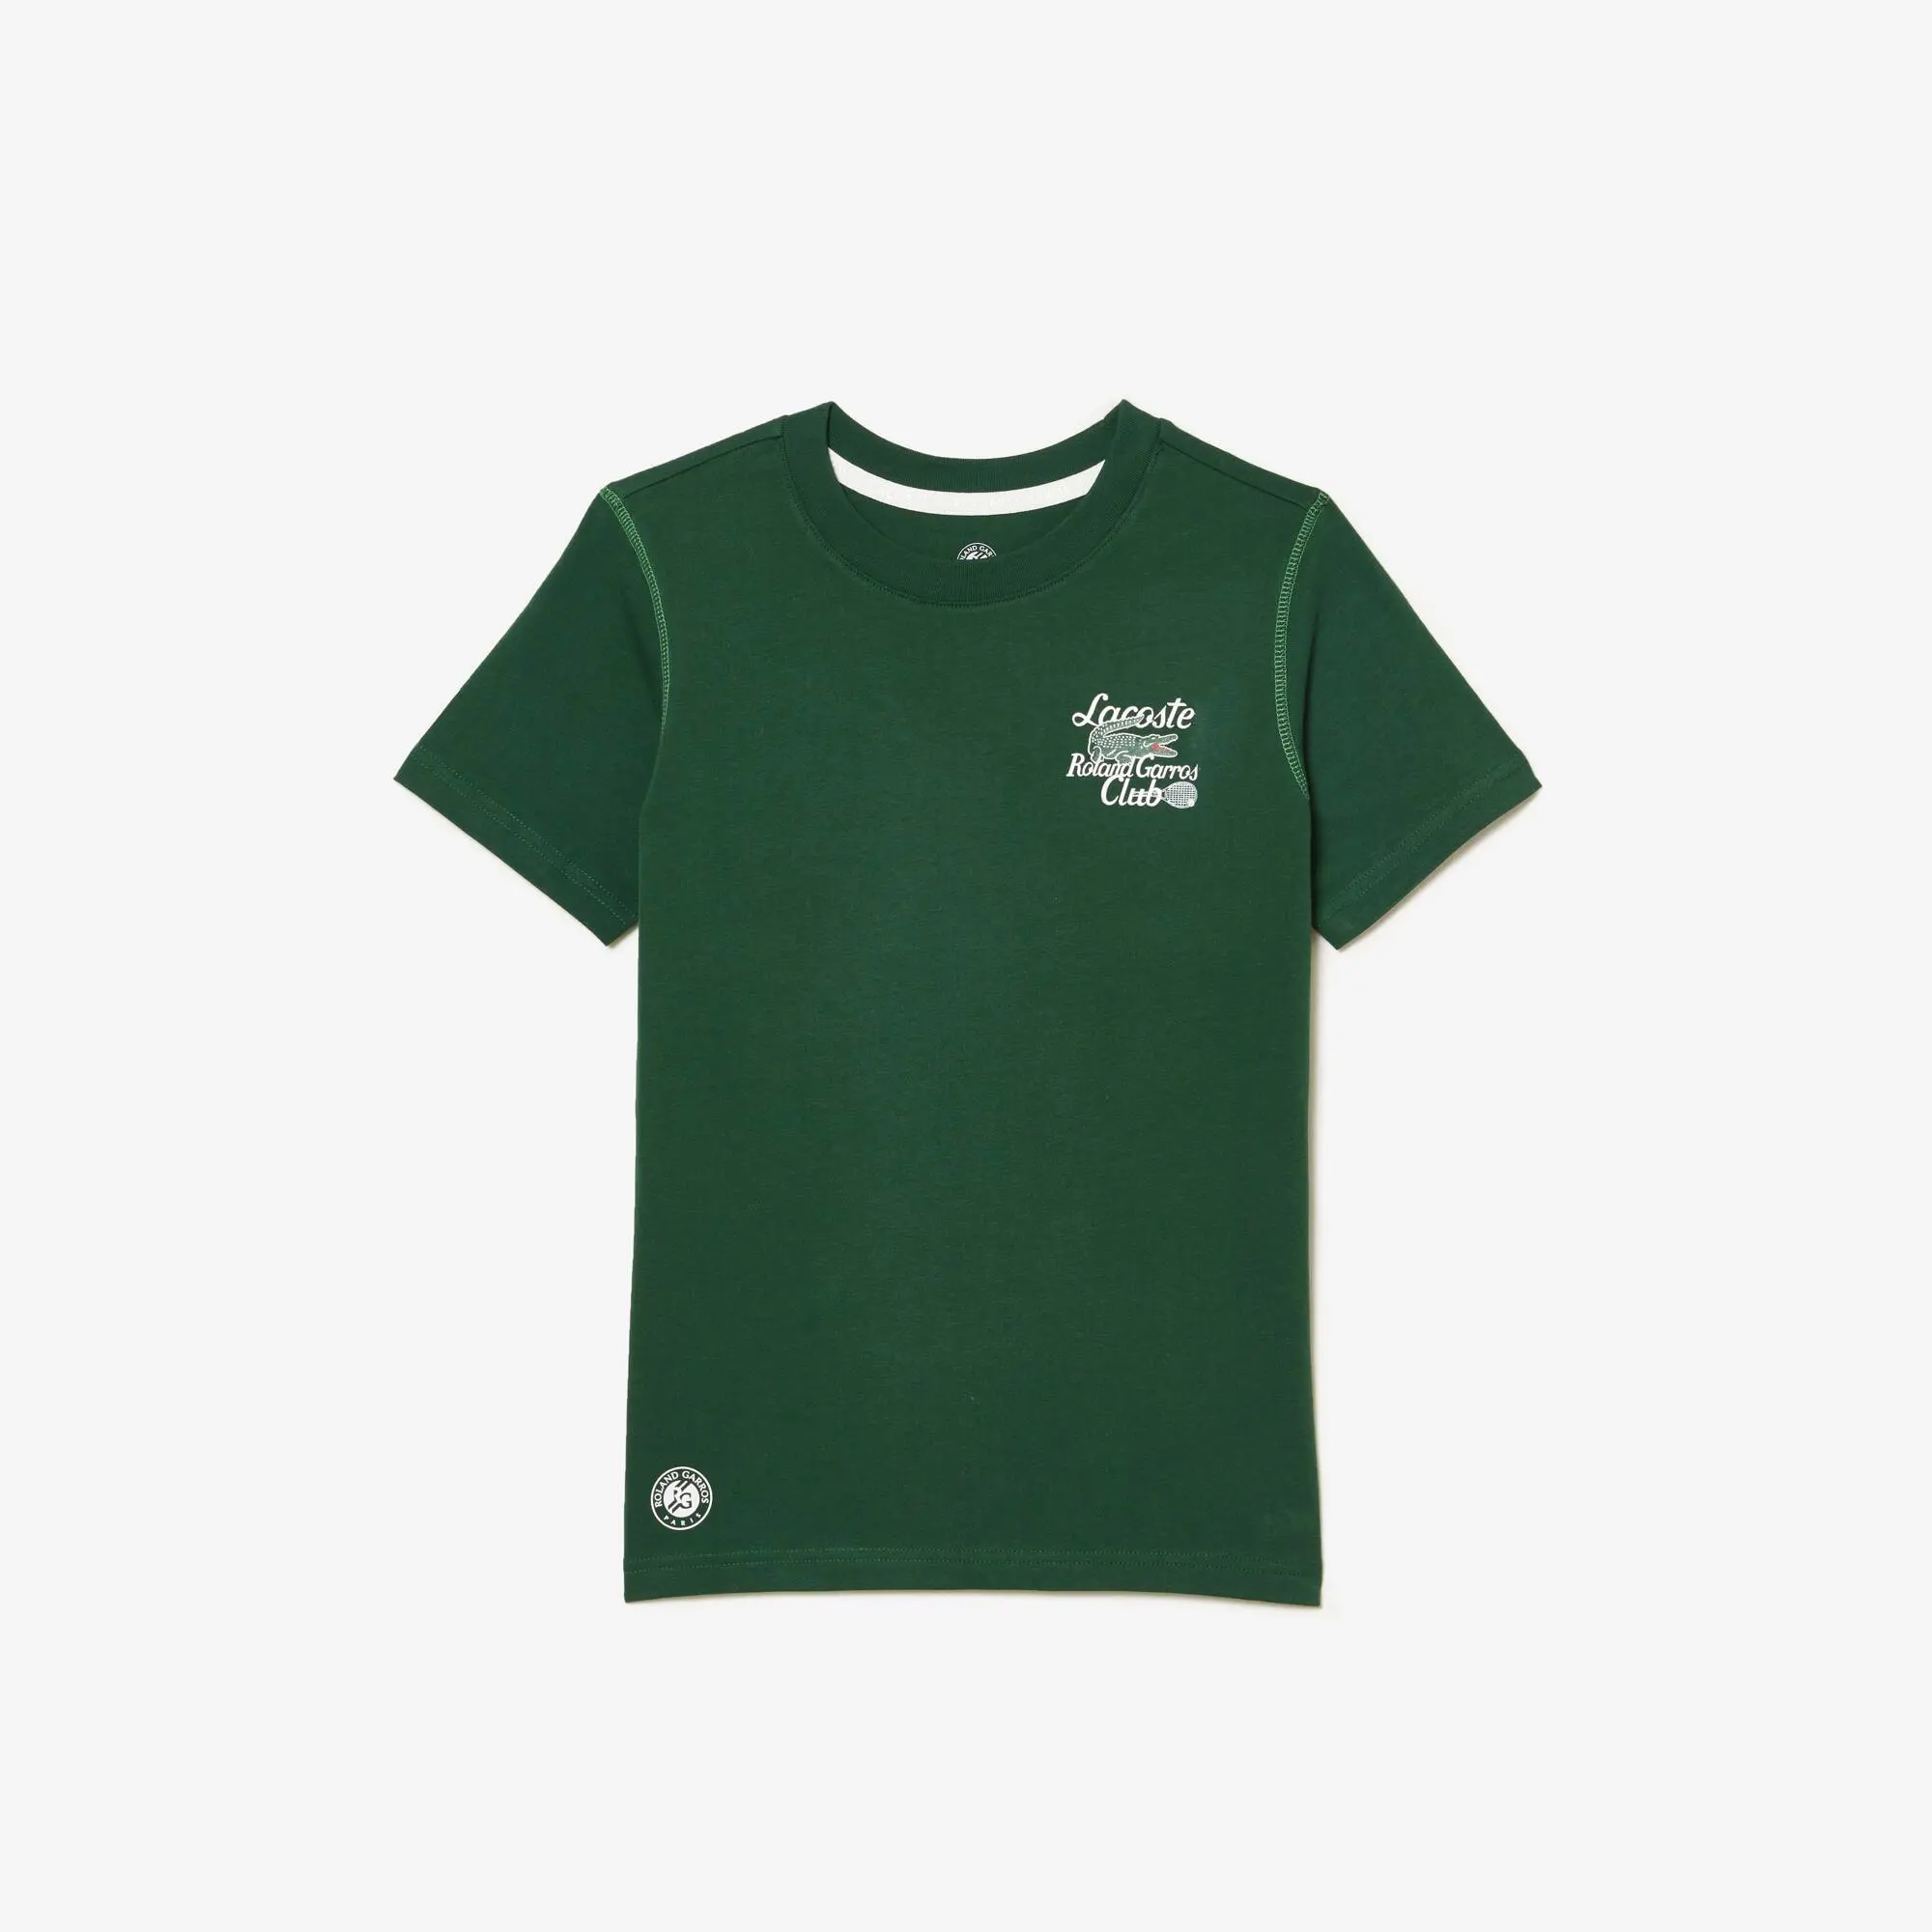 Lacoste Kids’ Lacoste Sport Roland Garros Edition Jersey T-shirt. 2